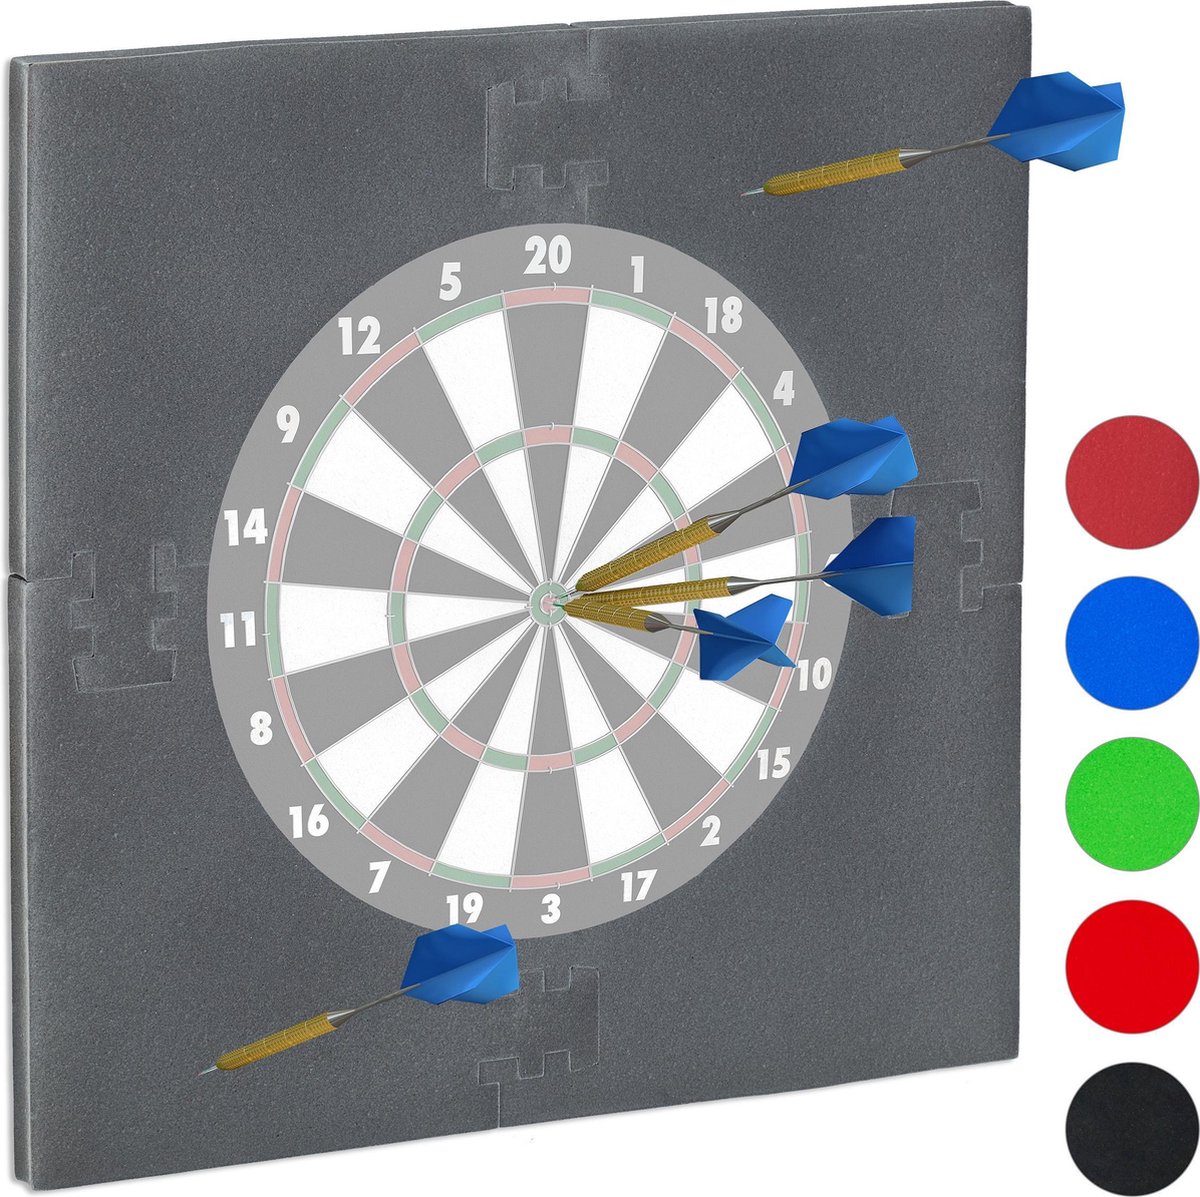 Relaxdays dartbord surround ring - beschermrand - beschermring - ring voor dartbord - 45cm - grijs